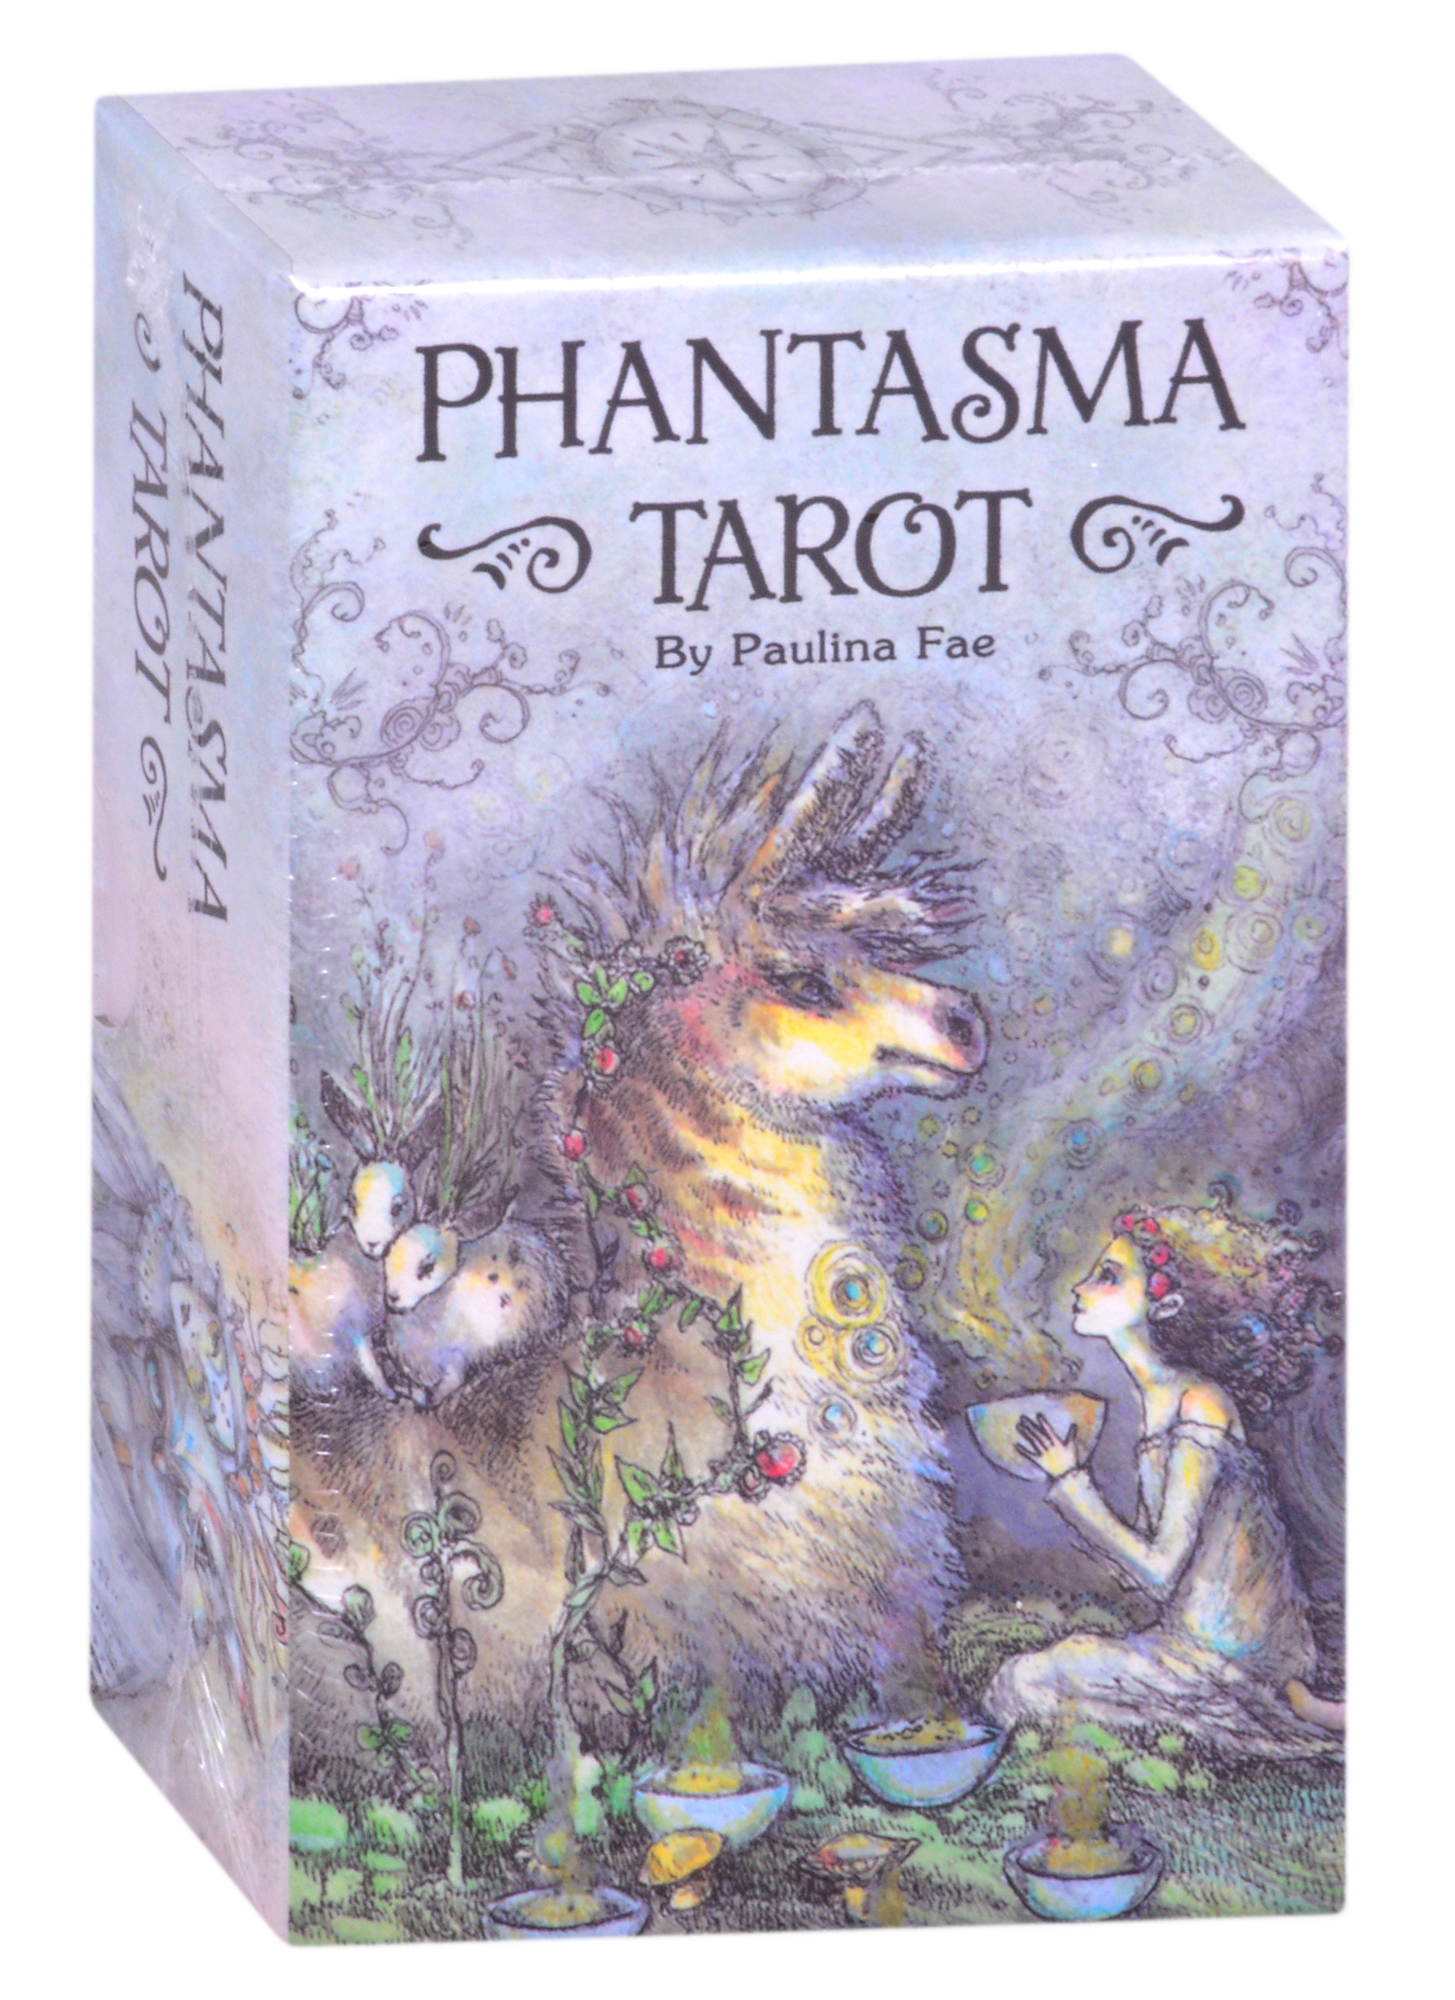 таро таинственного леса tarot of the magical forest av159 Fae P. Phantasma Tarot (78 Cards)АВВАЛЛОН